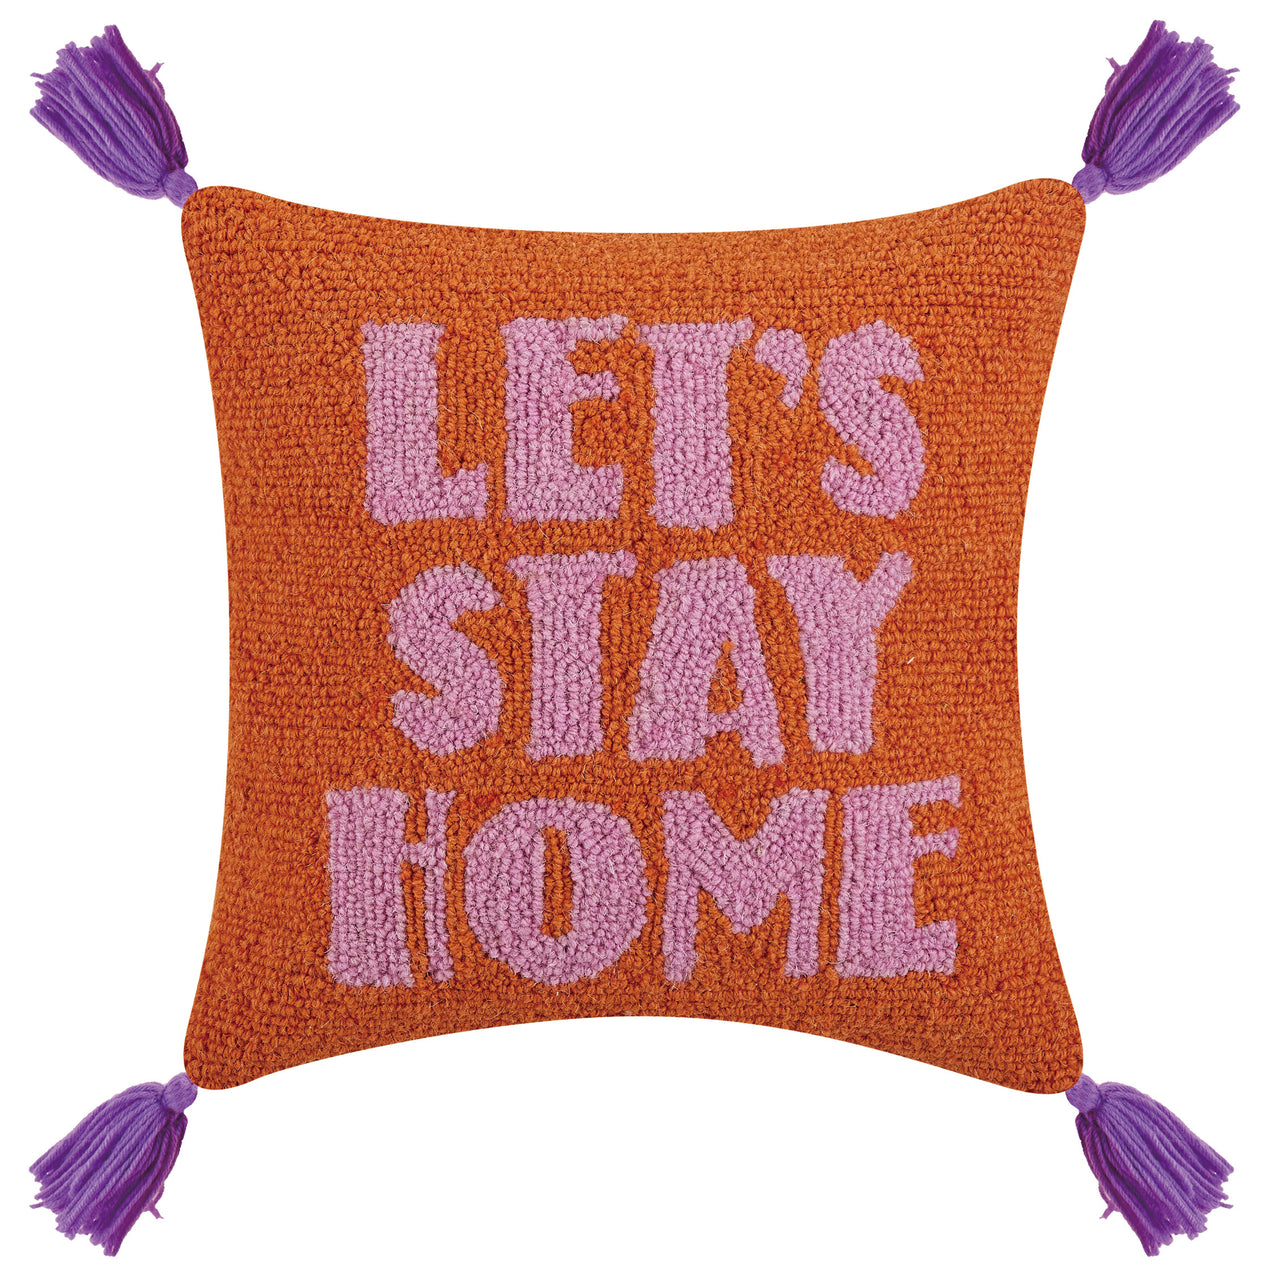 Let's Stay Home W/Tassels Hook Pillow